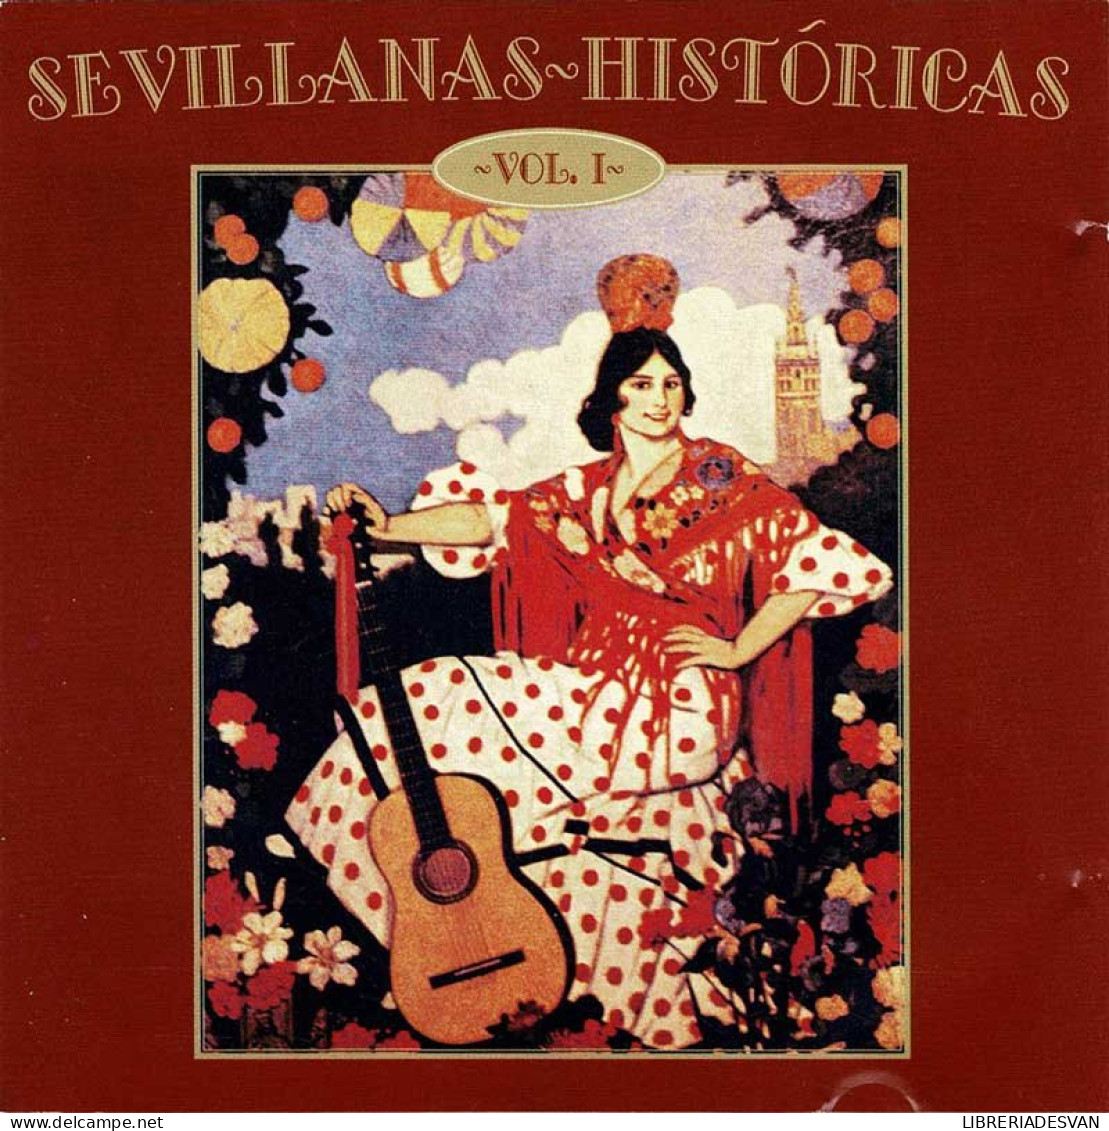 Sevillanas Históricas, Vol. 1. CD - Other - Spanish Music